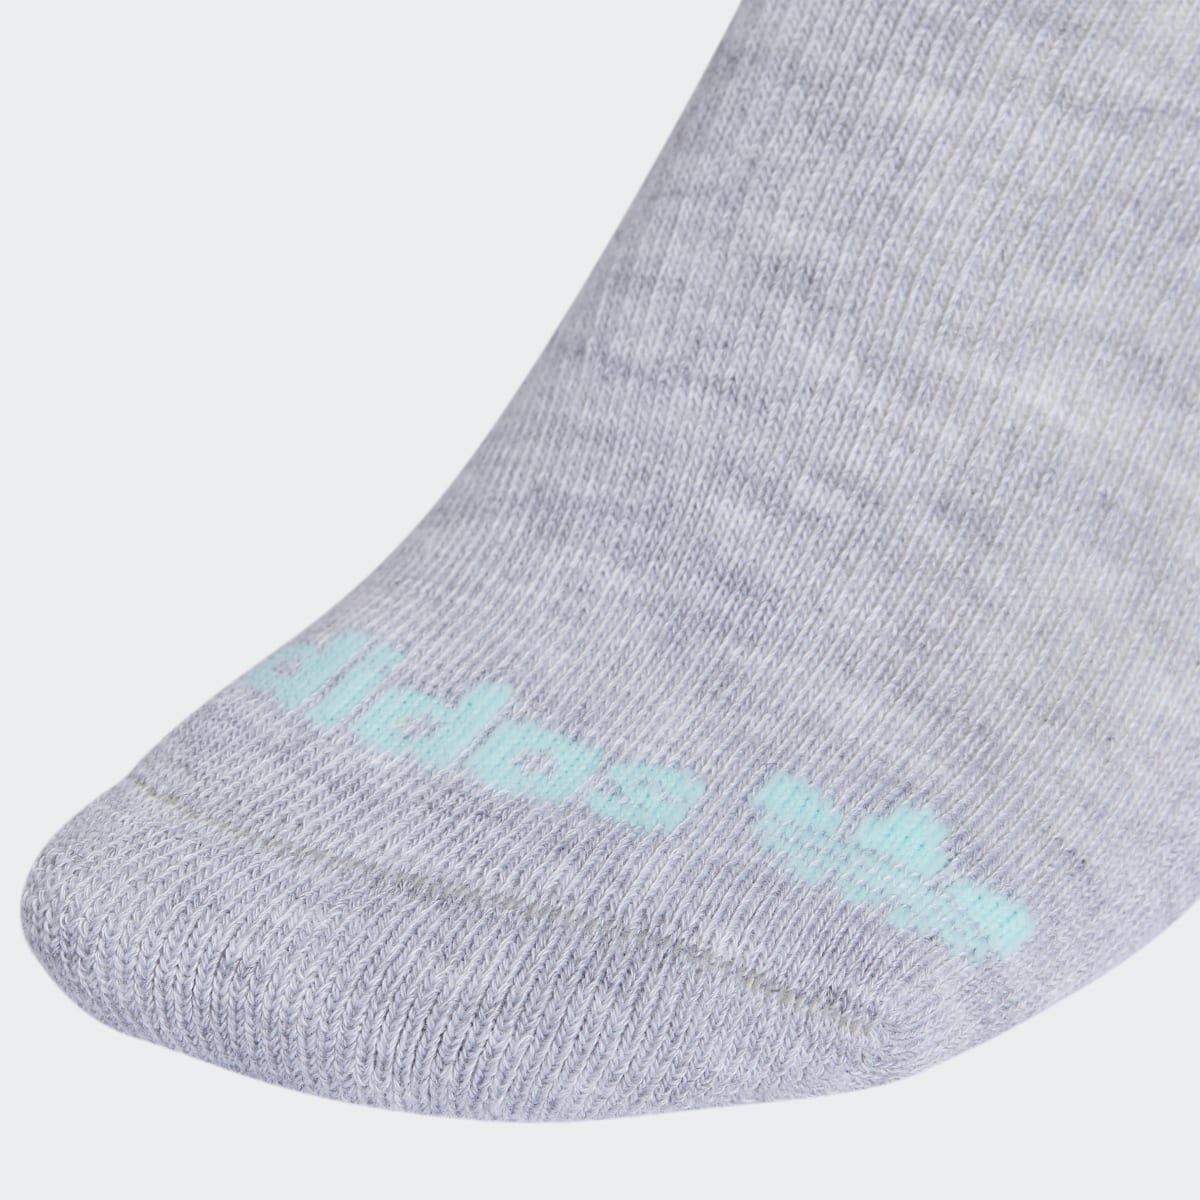 Adidas Ori Aura Socks 3 Pairs. 4